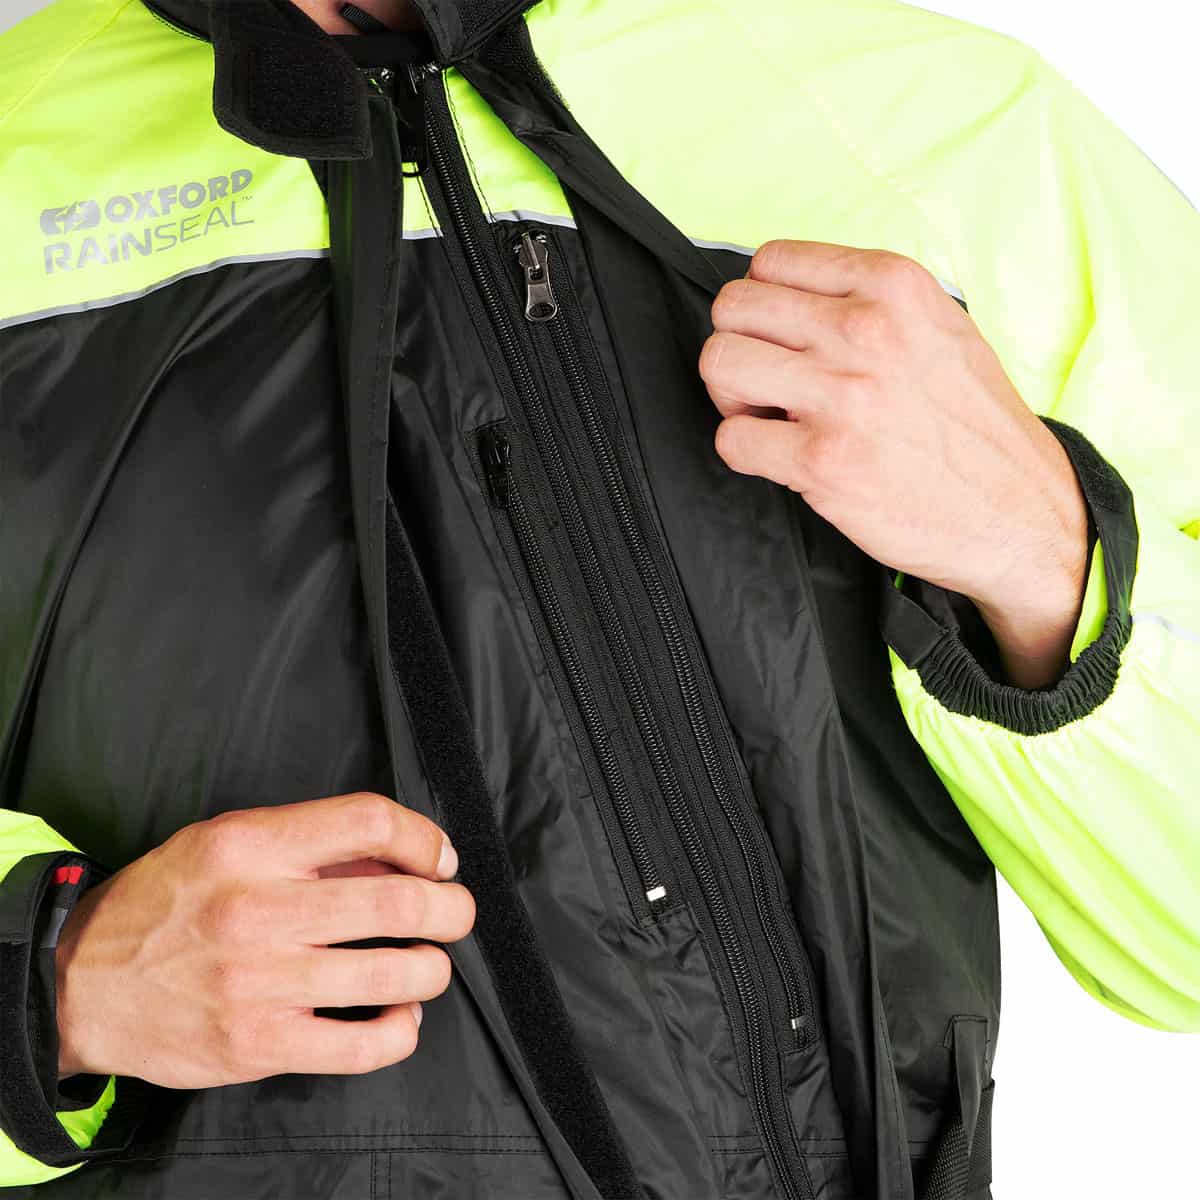 Oxford Rainseal Over Suit WP - Black/Fluo main zipper